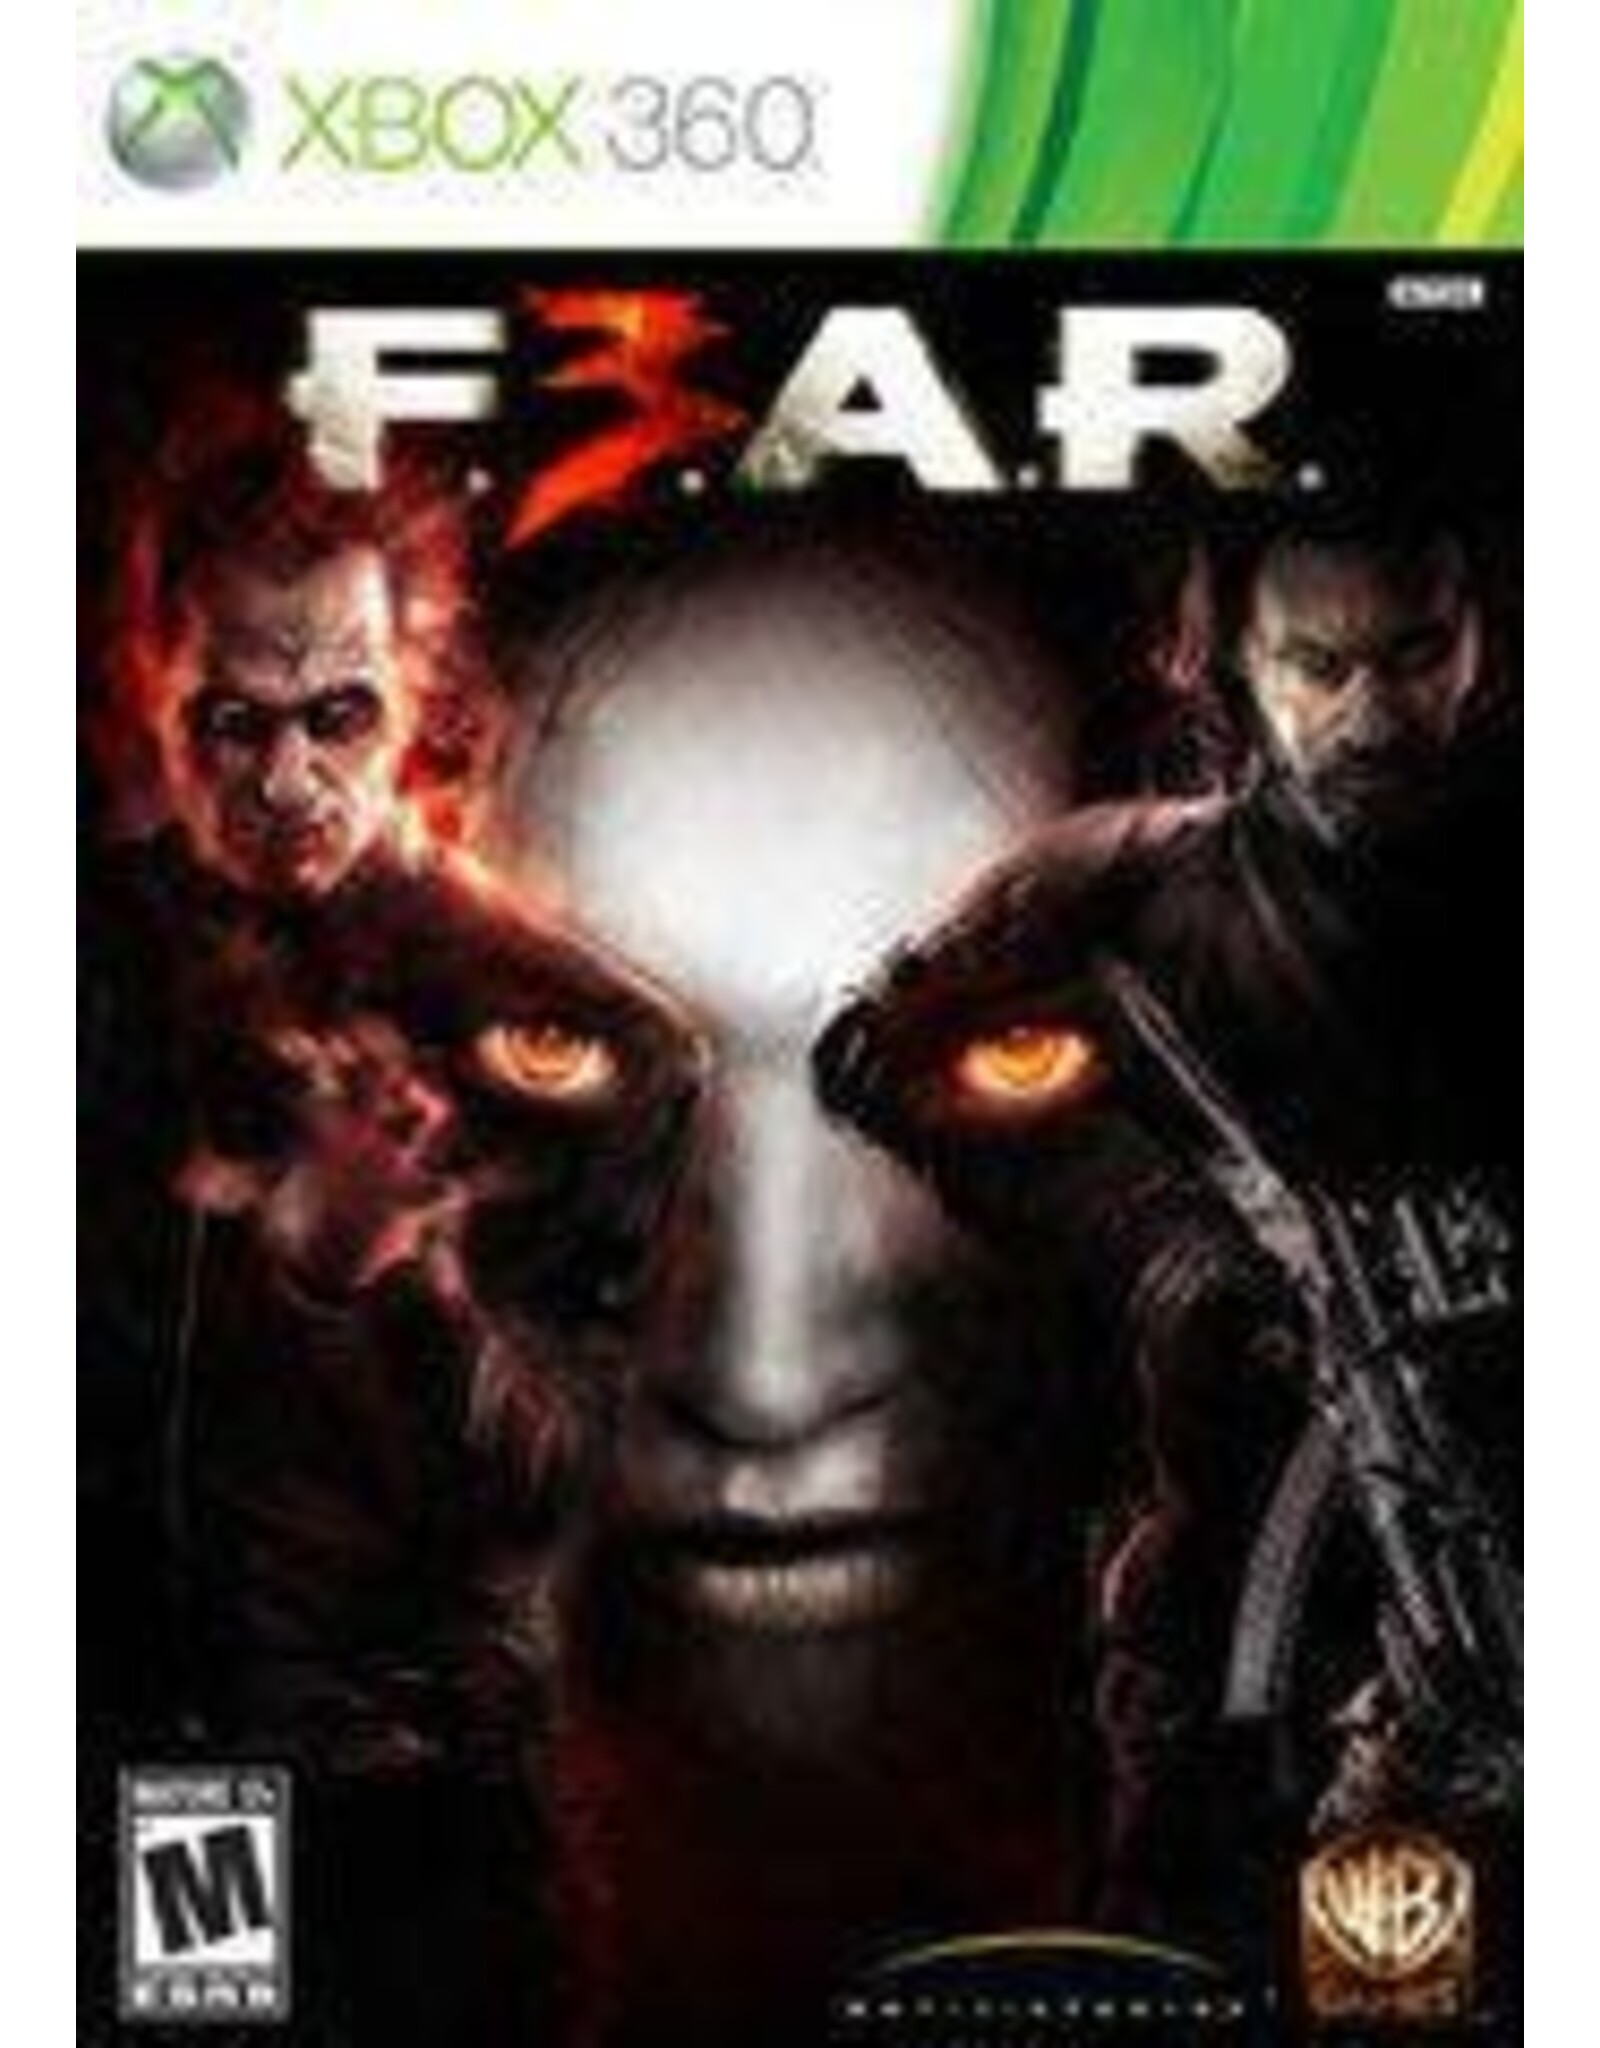 Xbox 360 FEAR 3 (Used)